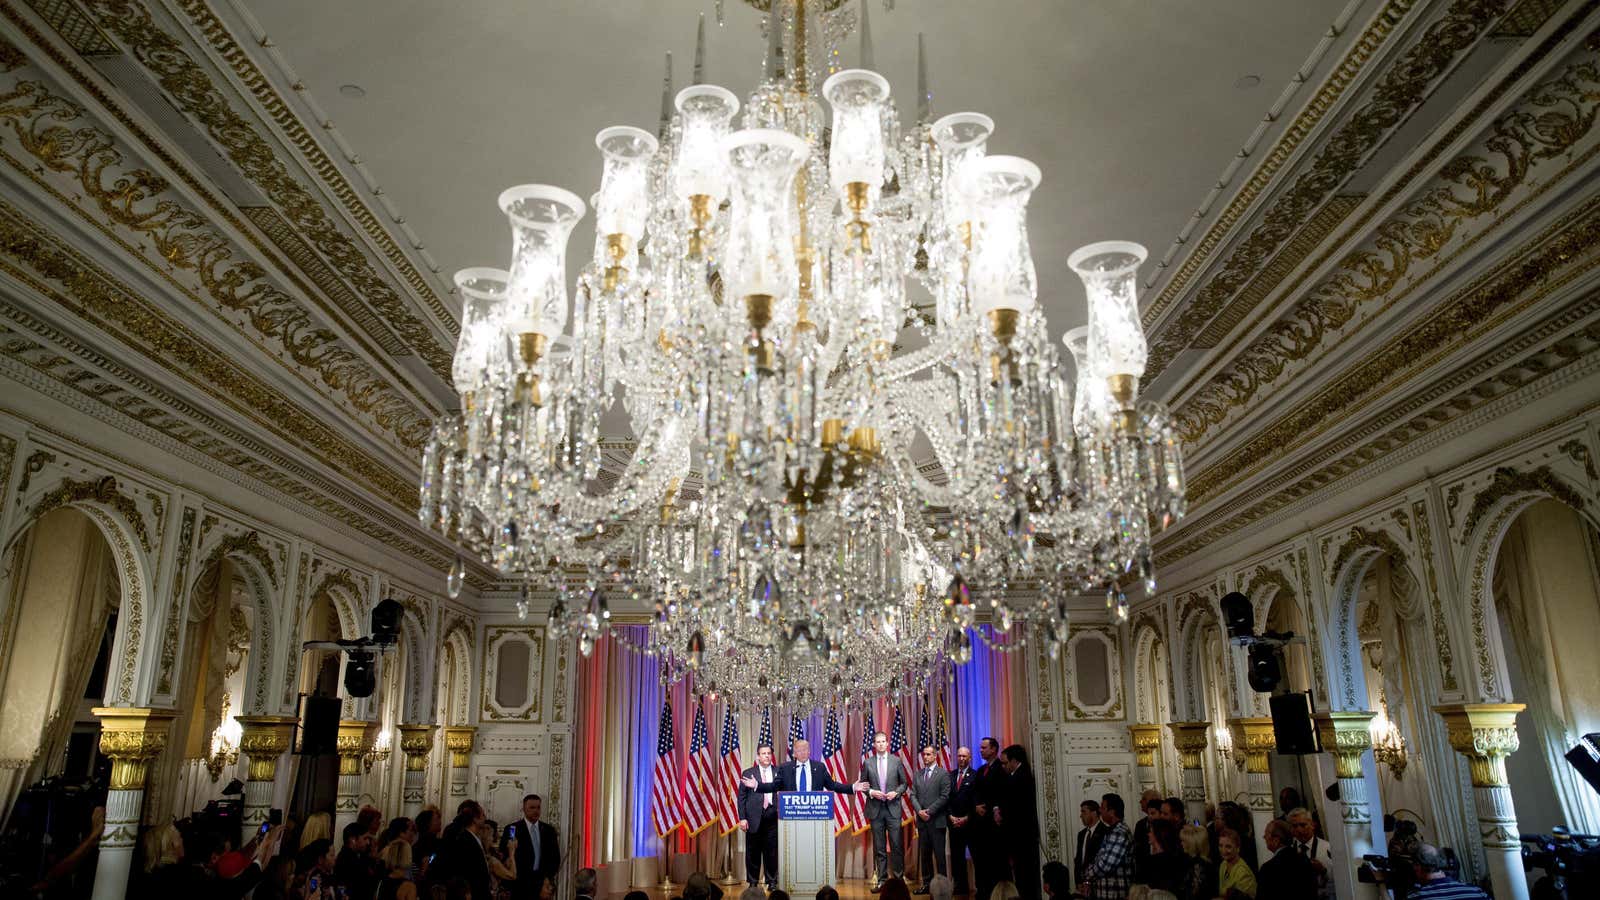 Trump speaks in the ballroom of his palatial Mar-a-Lago golf club